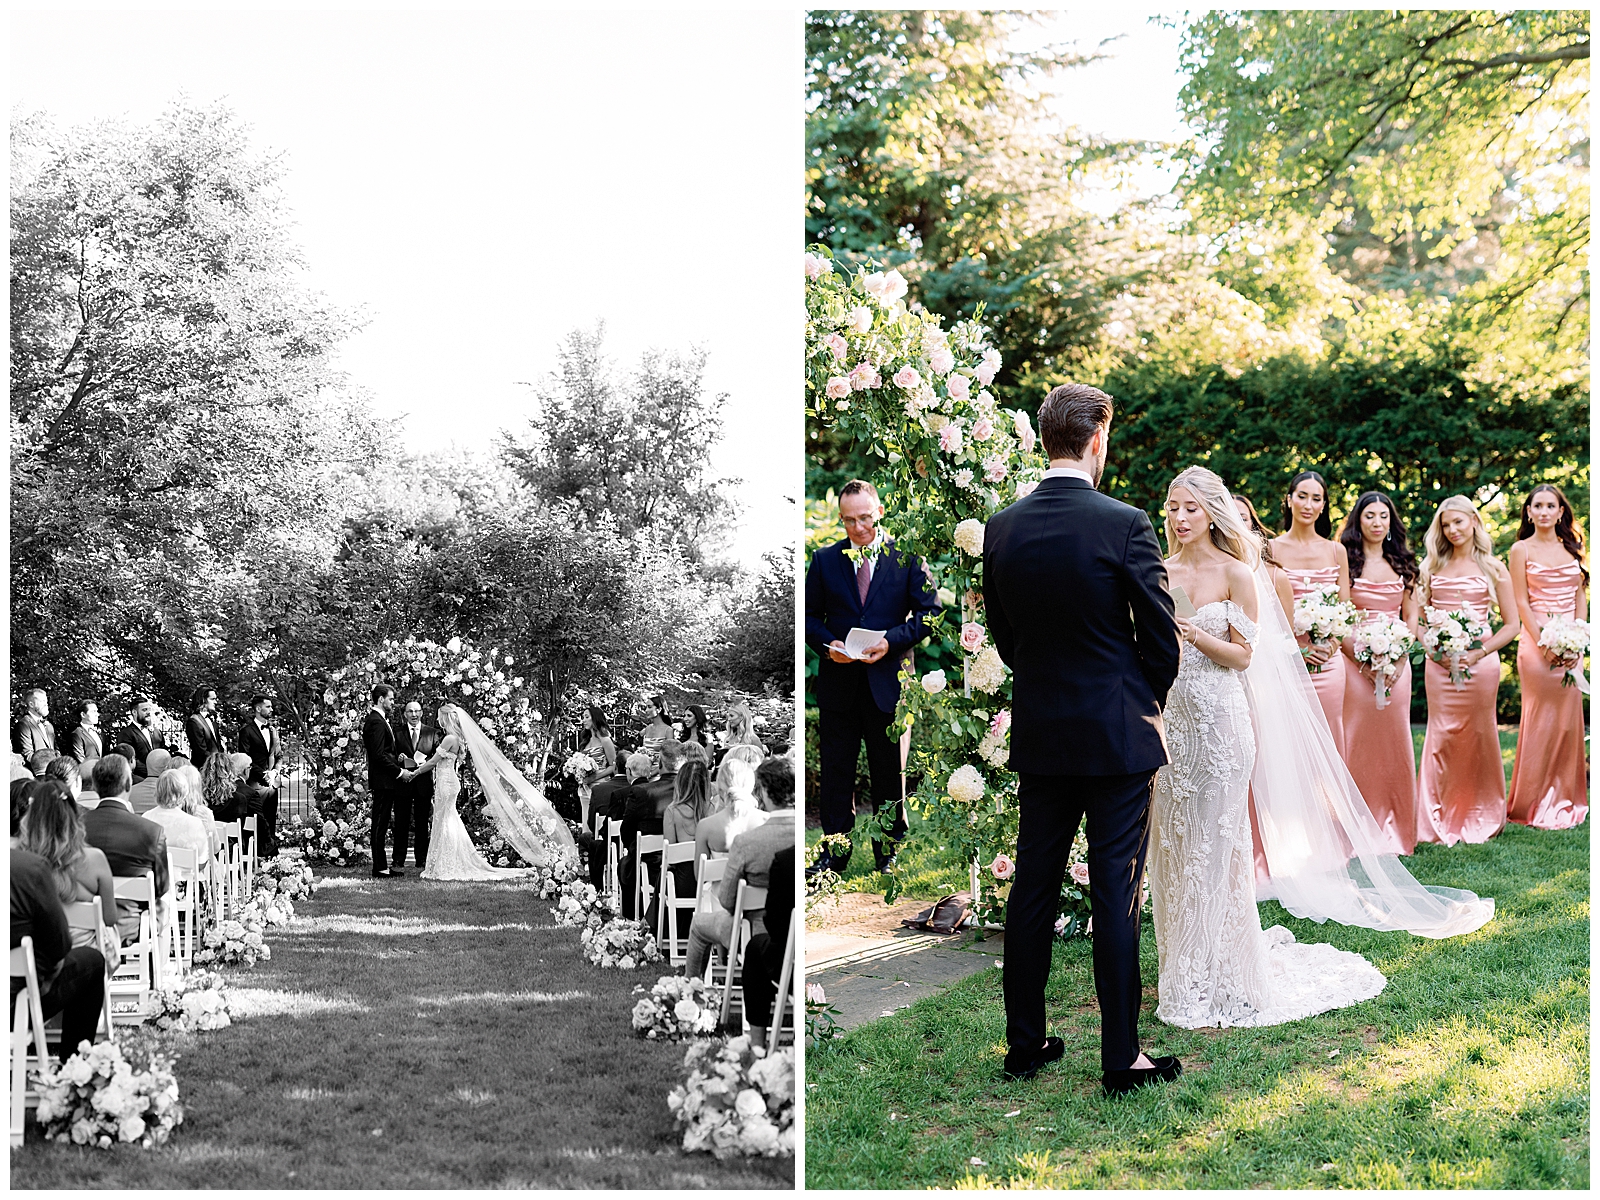 Graydon Hall Manor Toronto Wedding Ceremony in the Gardens Summer Romantic Florals Celebration | Jacqueline James Photography Toronto Wedding Photographer